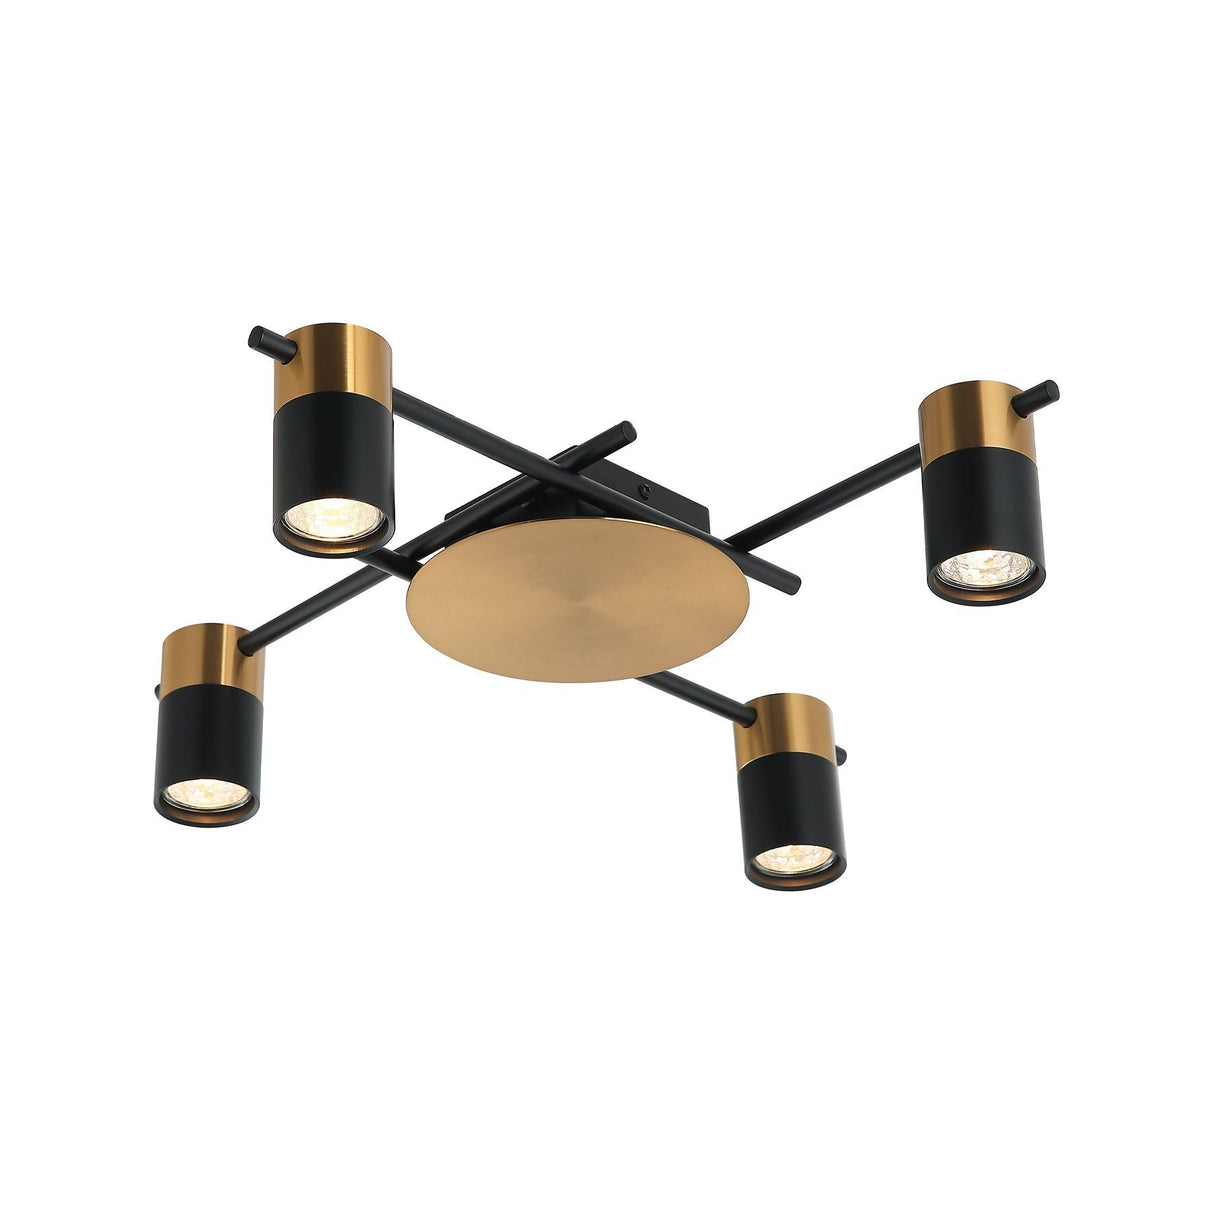 CLA TACHE Interior Spot Ceiling Lights with Adjustable Black & Antique Brass Heads